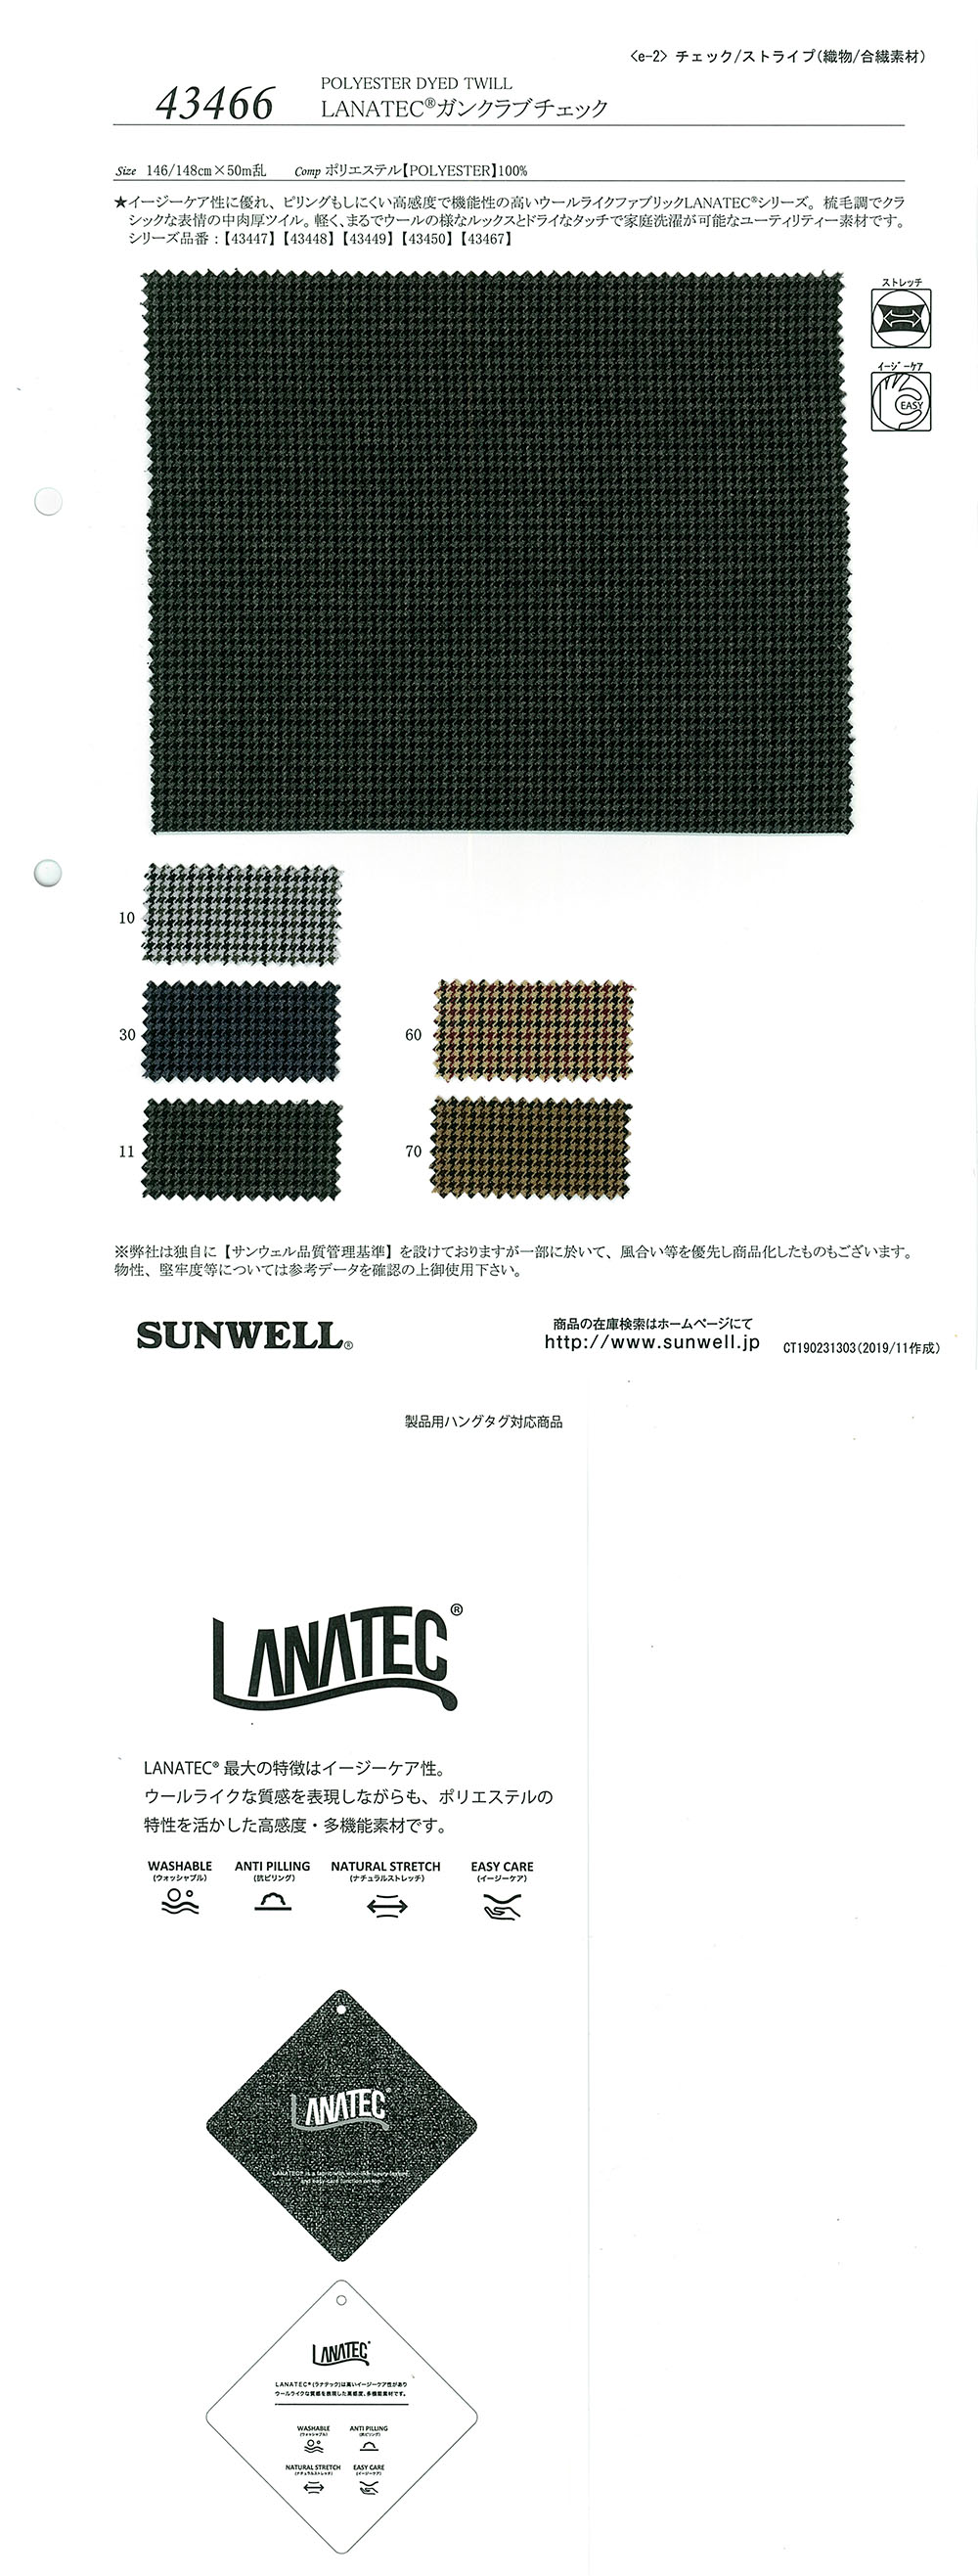 43466 LANATEC(R) Gun Club Check[Textilgewebe] SUNWELL